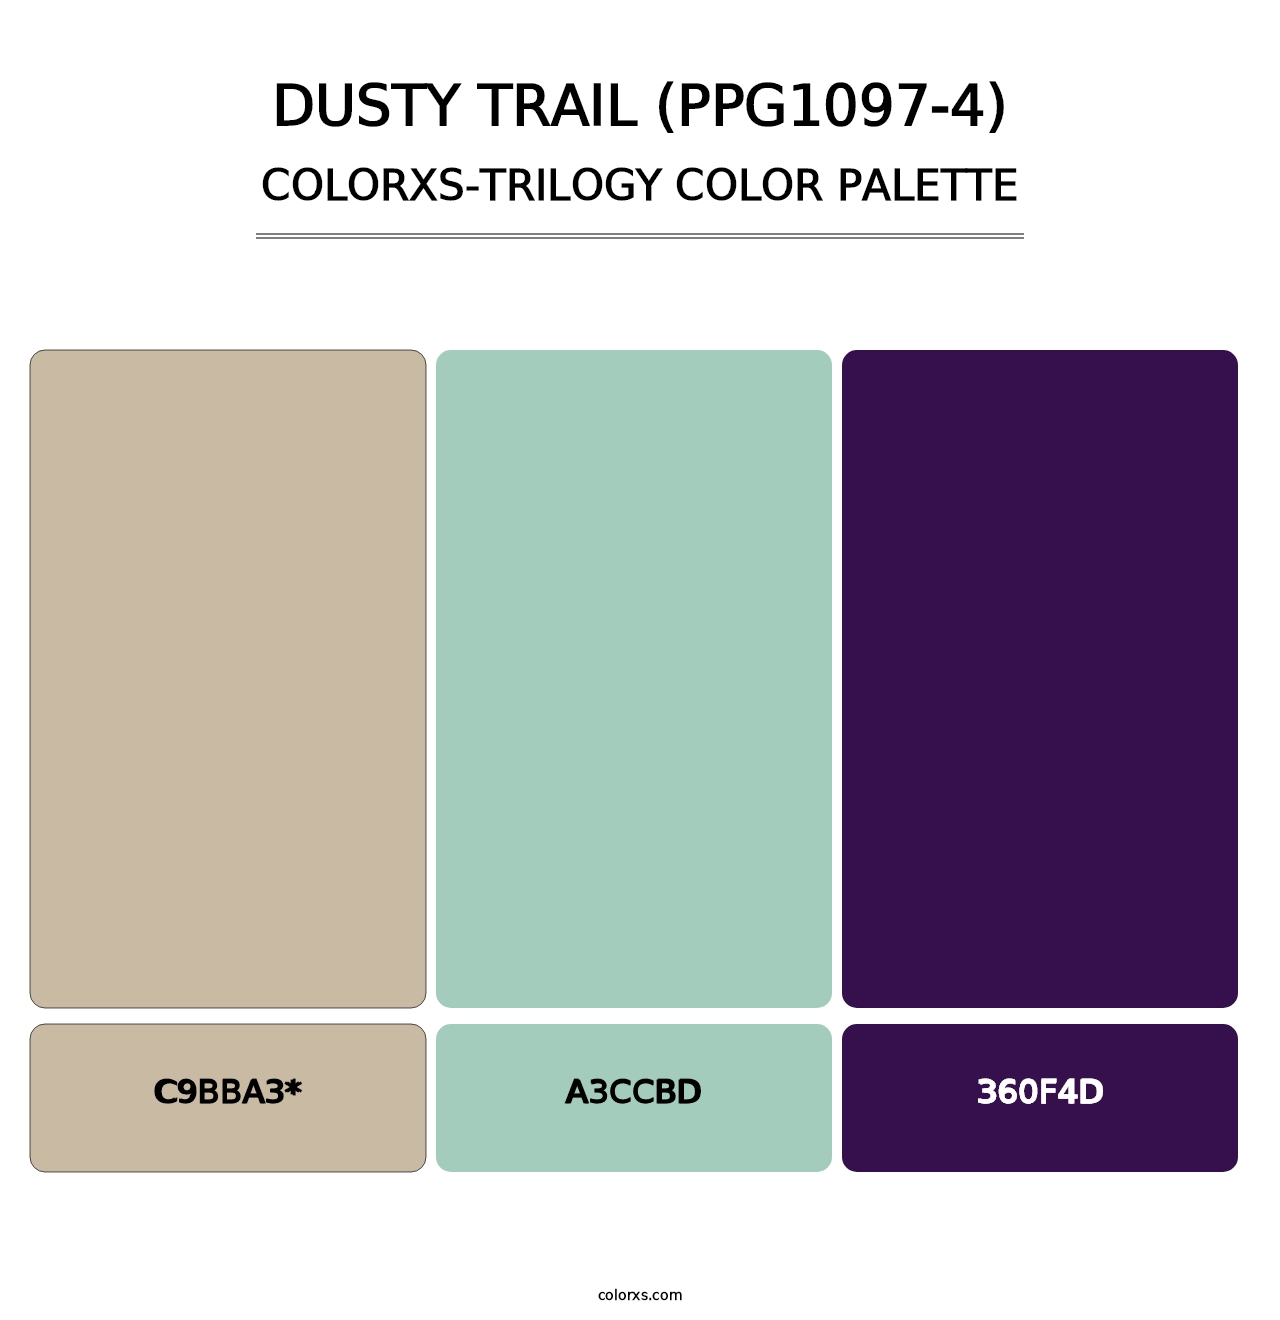 Dusty Trail (PPG1097-4) - Colorxs Trilogy Palette